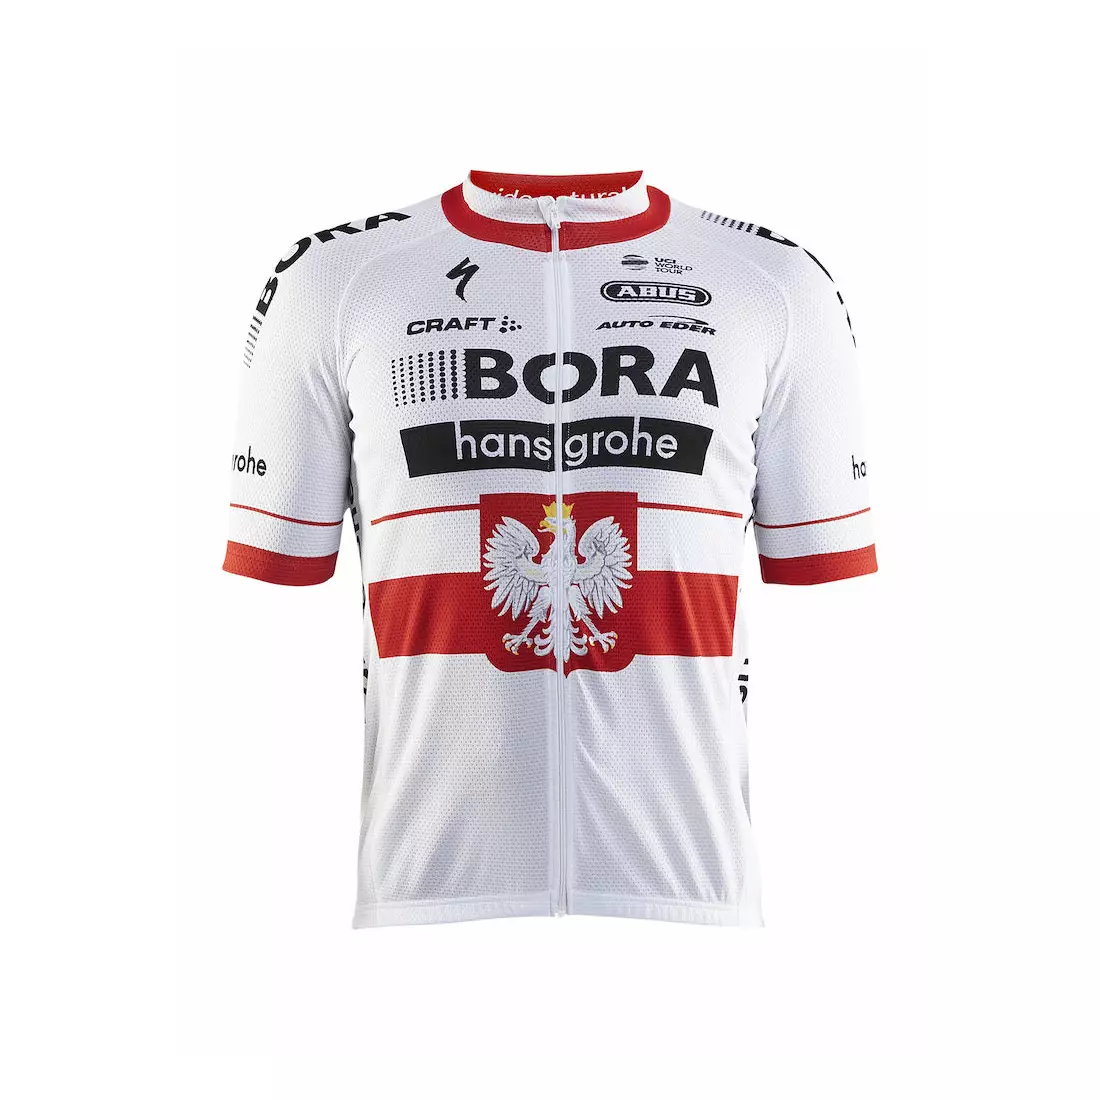 CRAFT BORA hansgrohe Polish Champion cycling jersey 1906104-2430